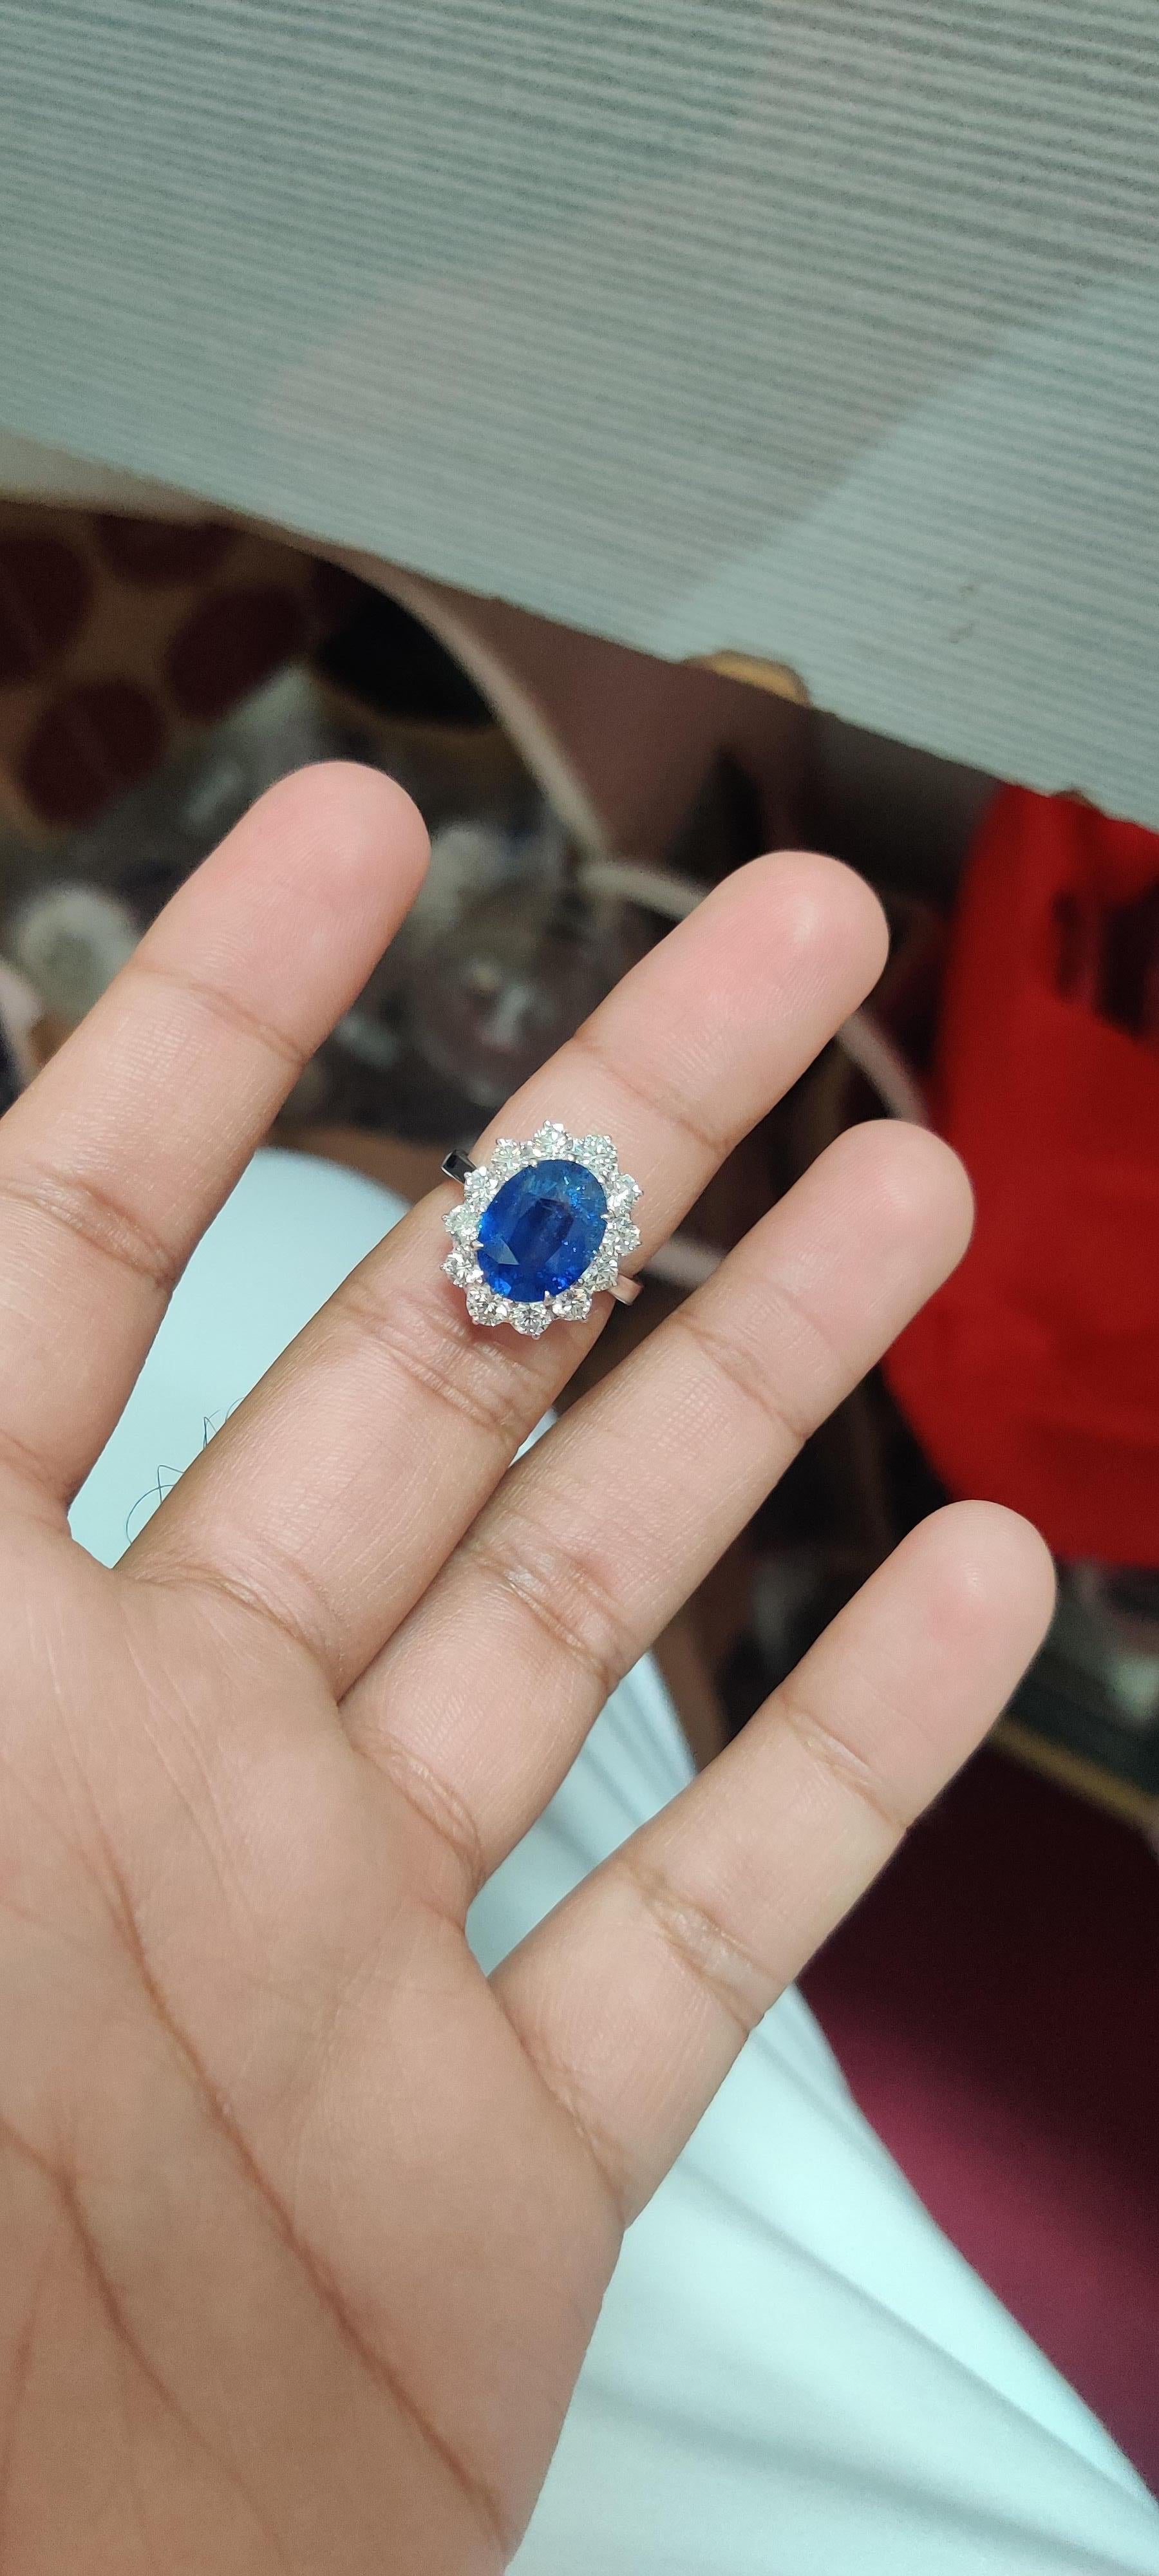 Oval Cut 4.56 Carat Natural Ceylon Blue Sapphire Diamond Ring For Sale